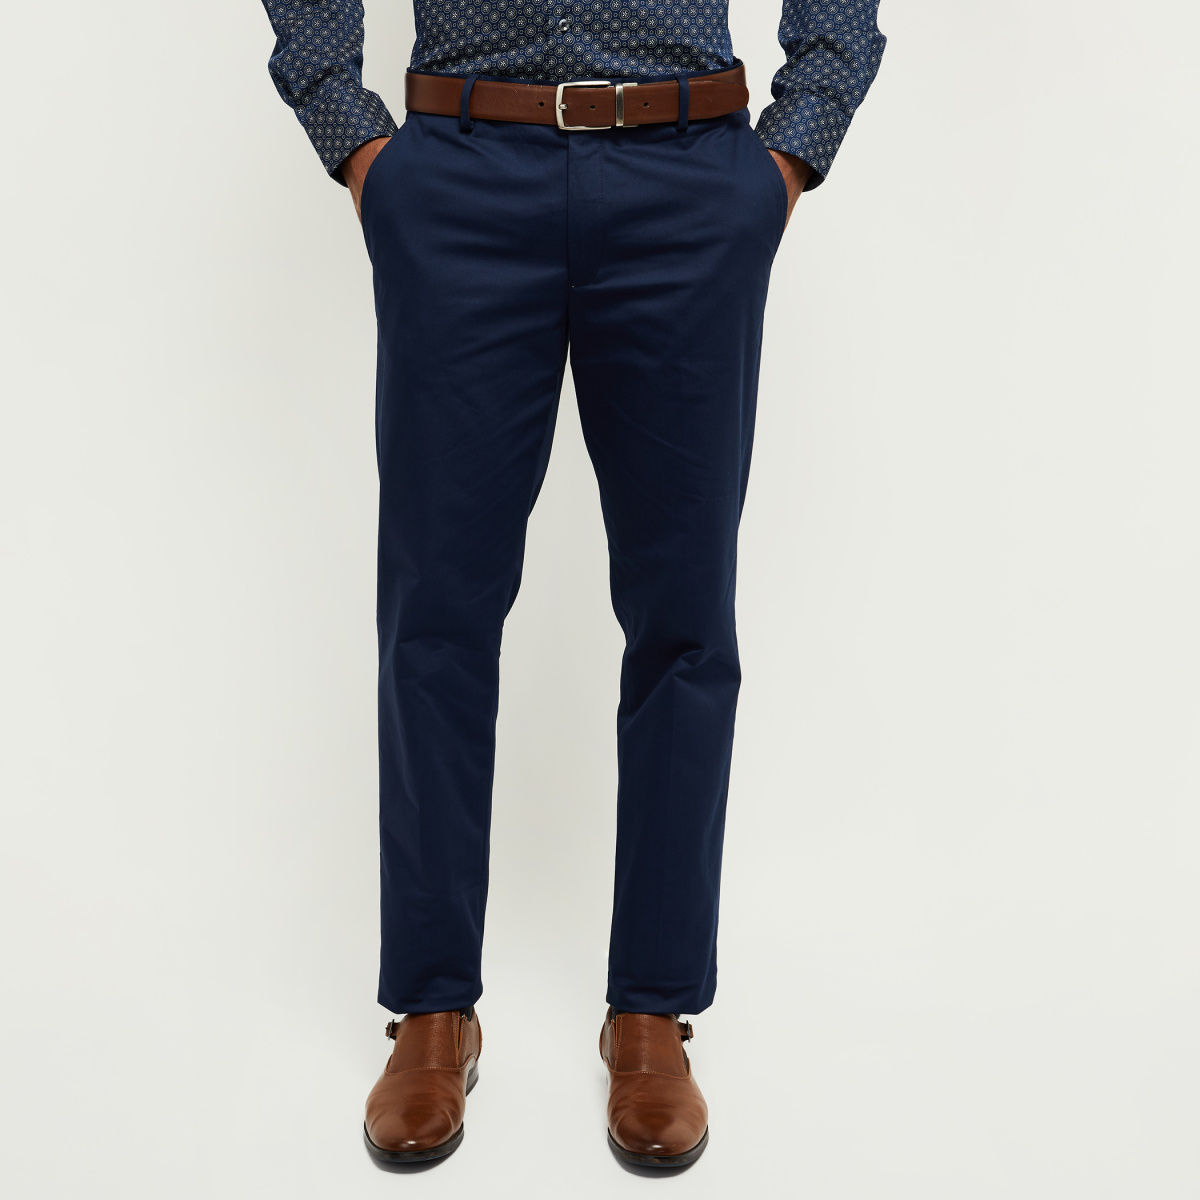 Shop New Look - One Stop Trend Shop | Mens pants casual, Mens fashion  blazer, Mens pants fashion